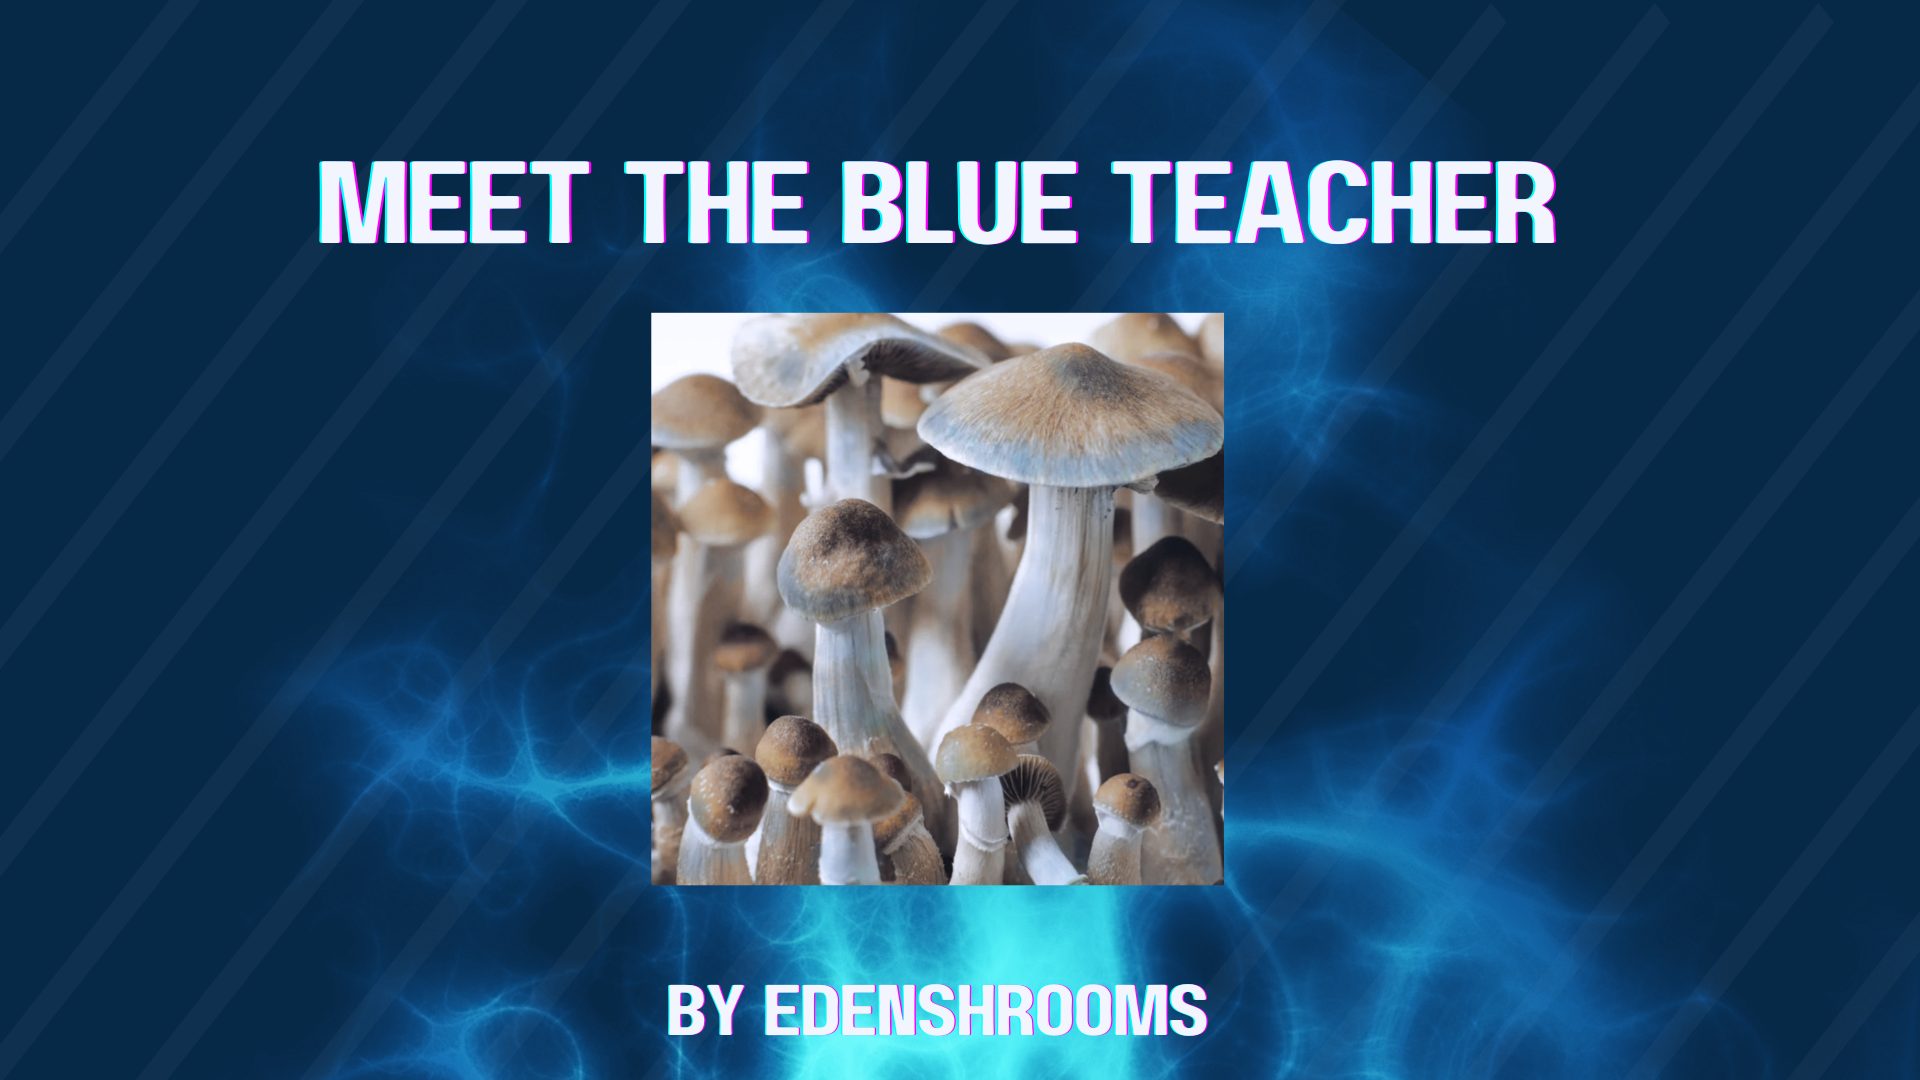 Blue Teacher Mushroom With Blue Background and text that reads "Meet The Blue Teacher" 